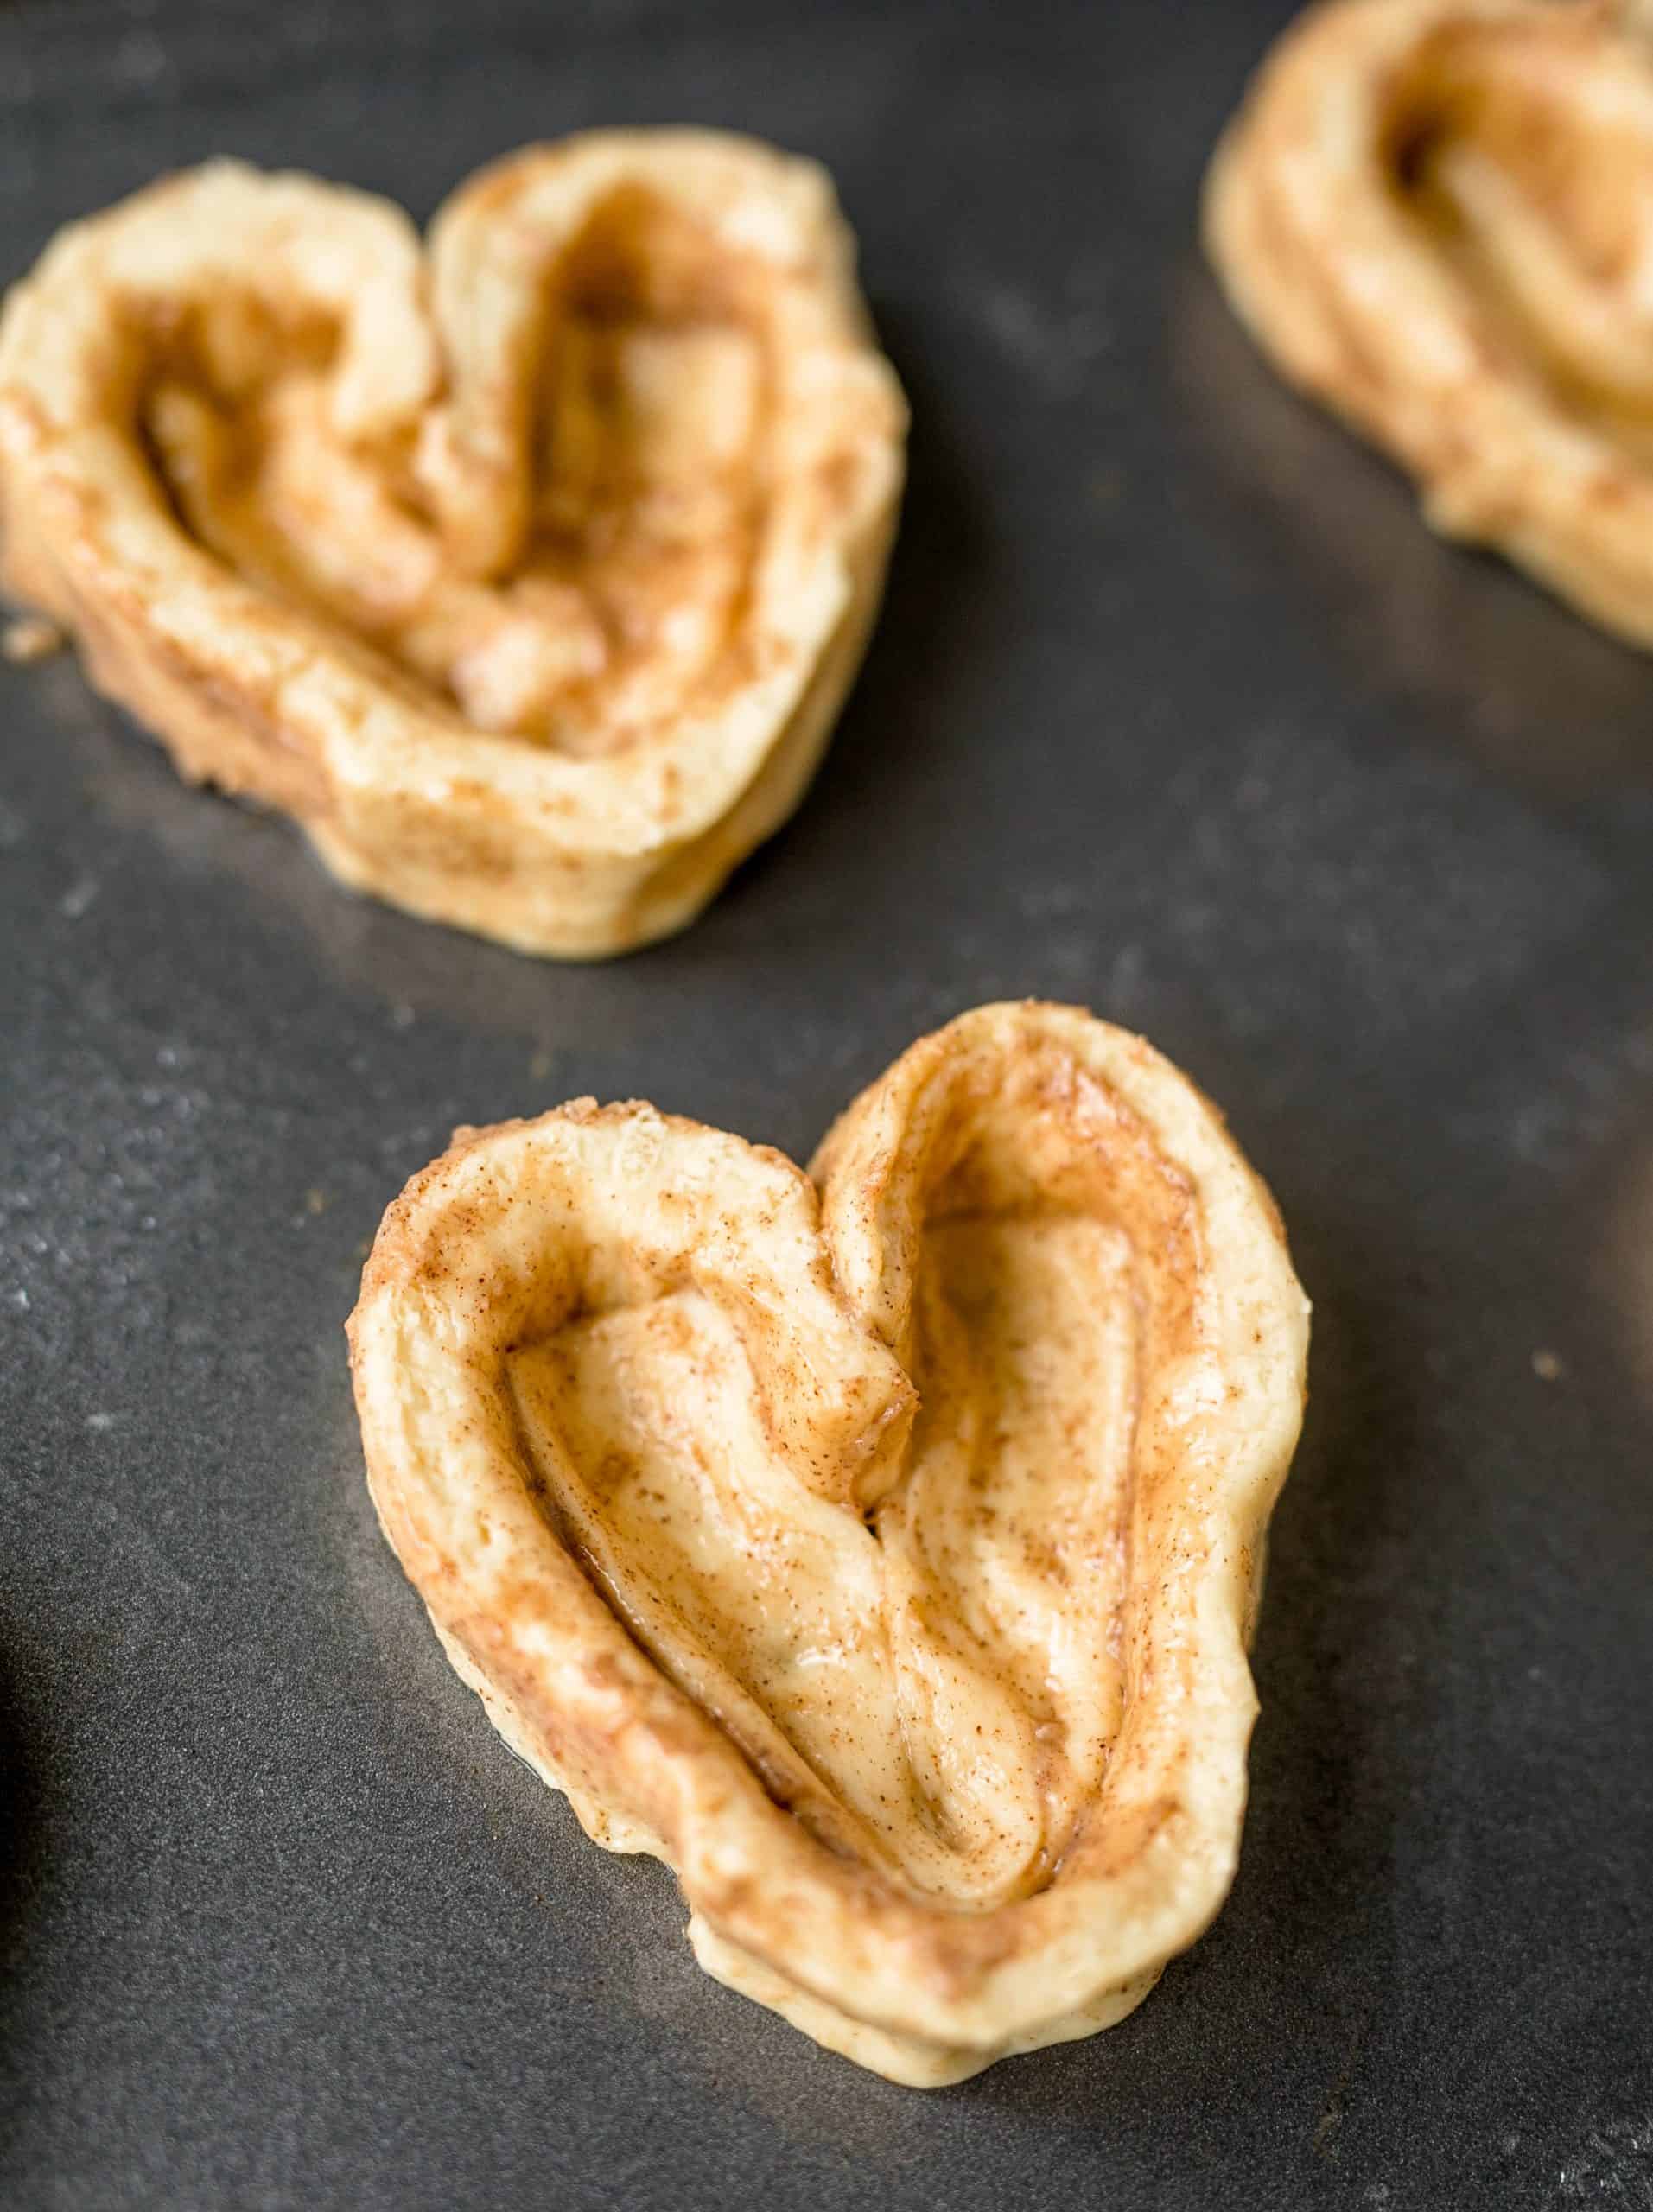 Cinnamon rolls shaped like hearts on baking sheet